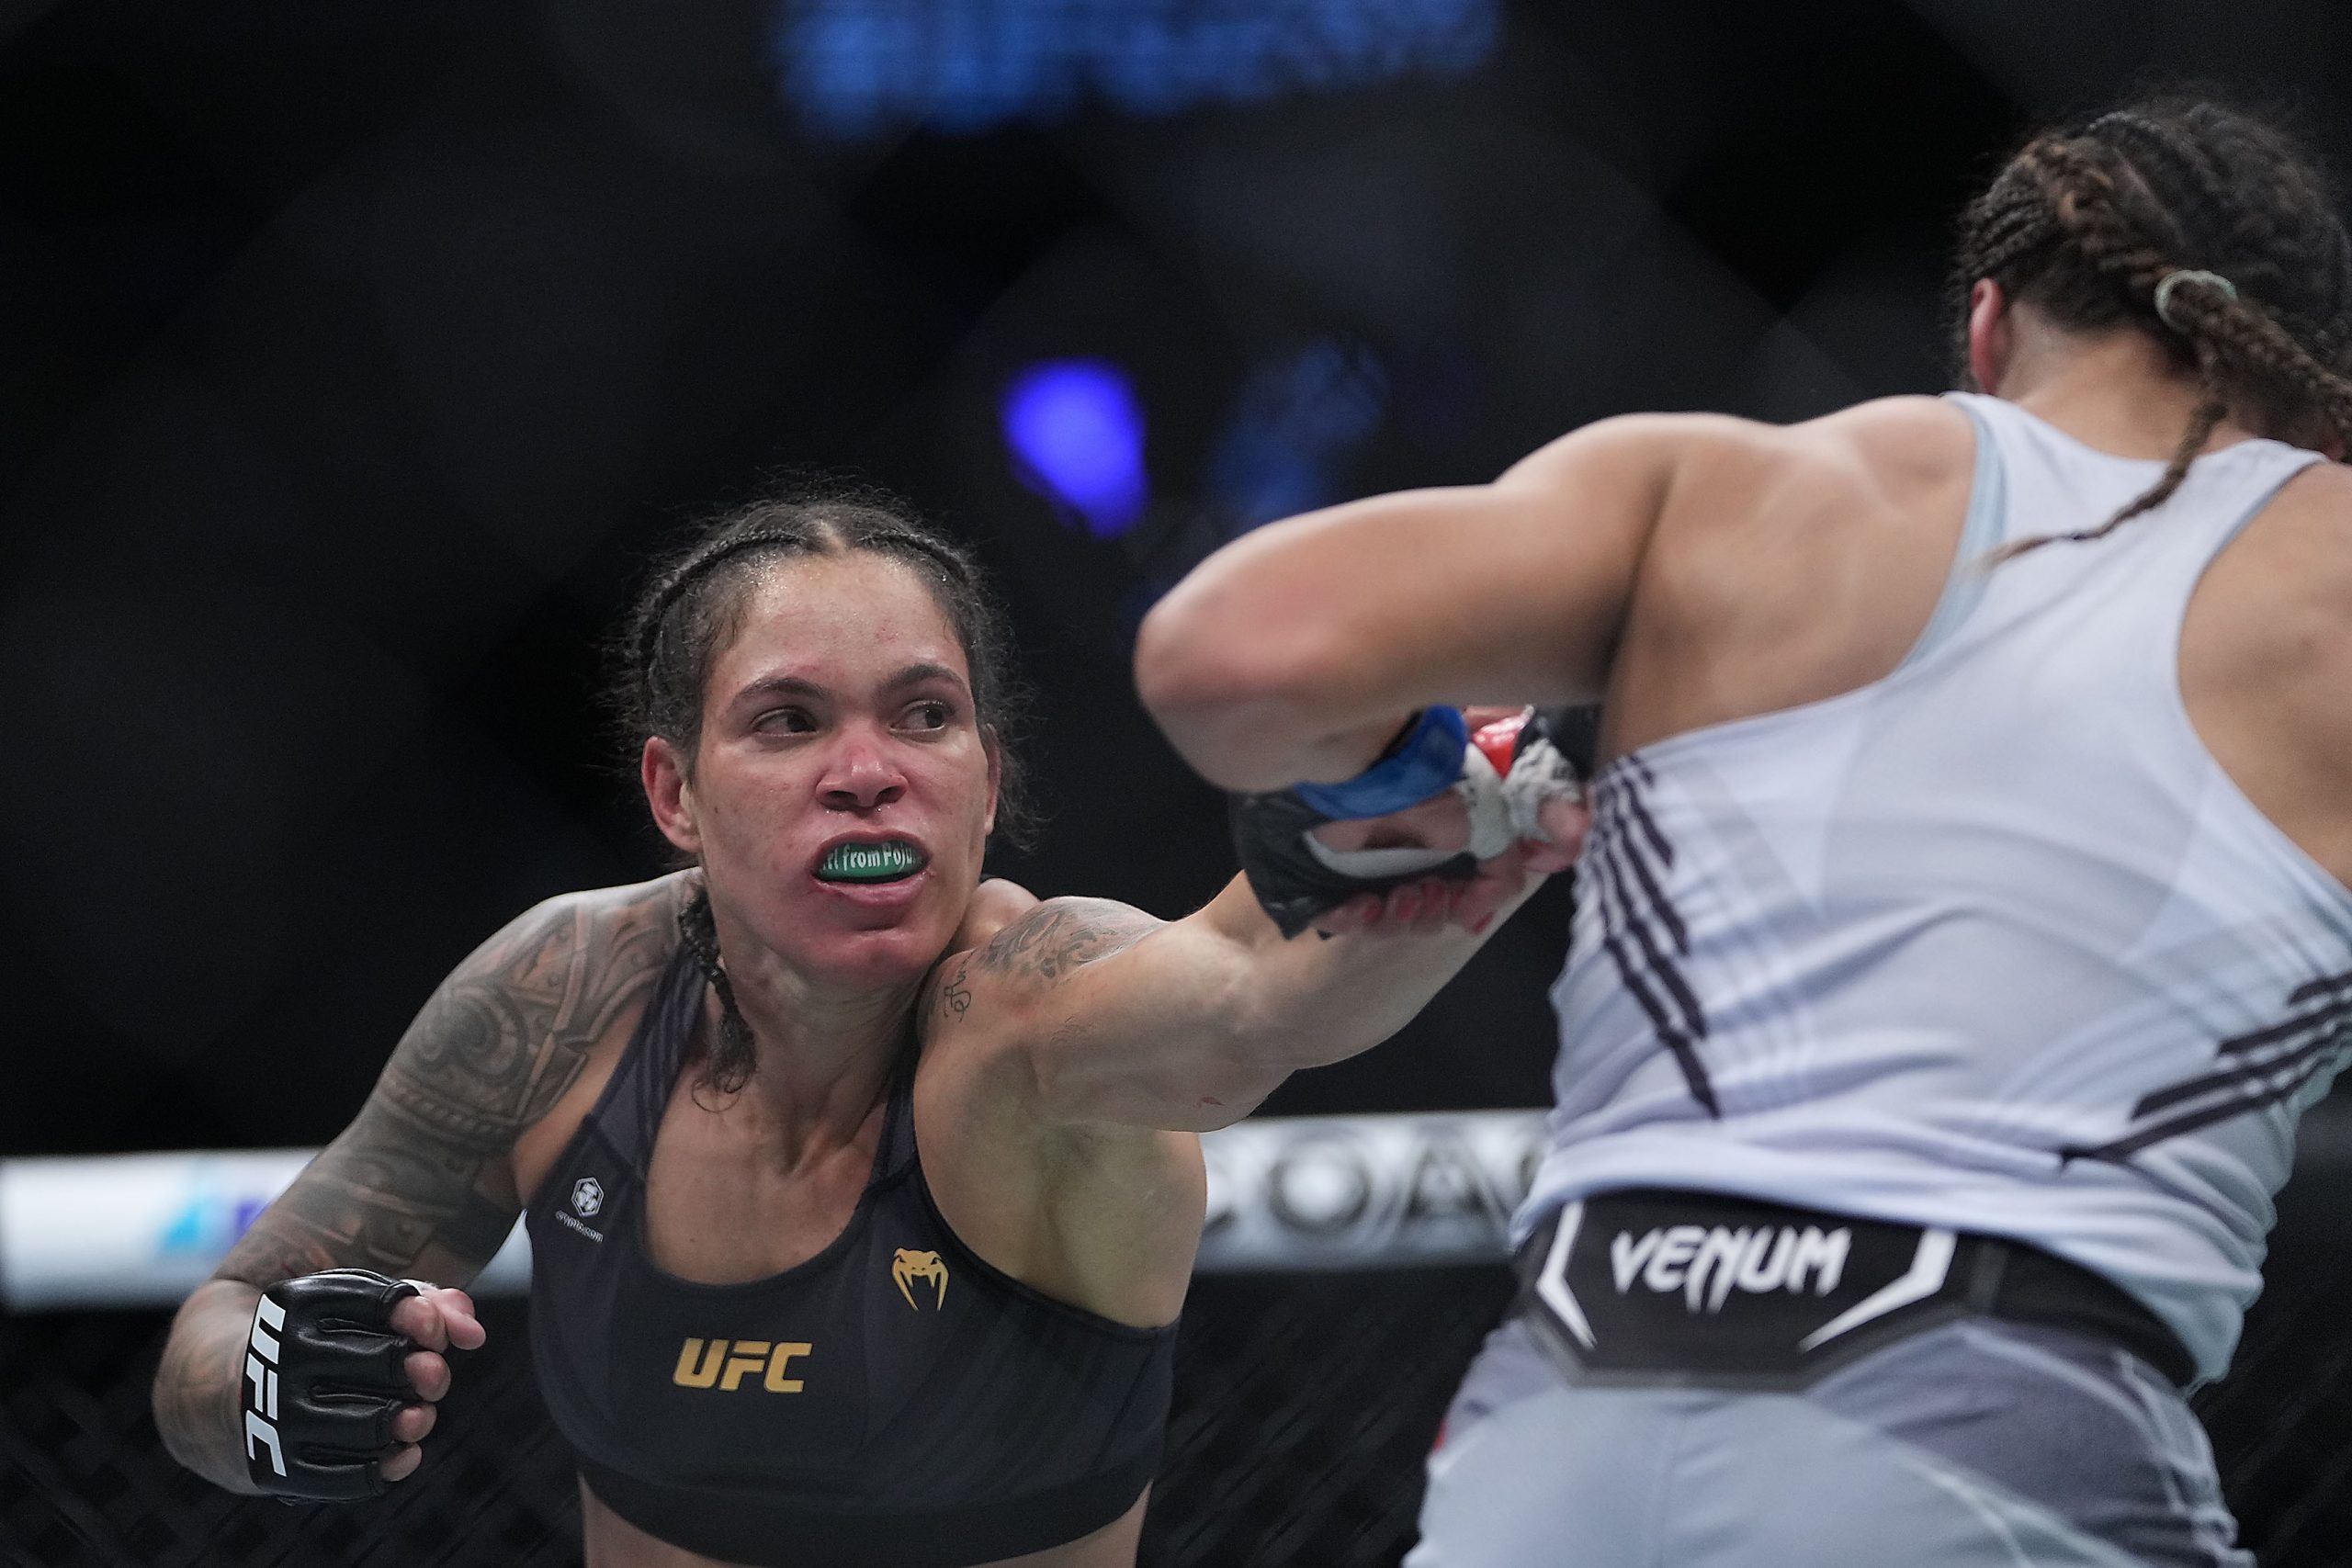 UFC 277: Julianna Pena vs Amanda Nunes four-fight parlay (+477 odds) - Nunes reclaims her throne